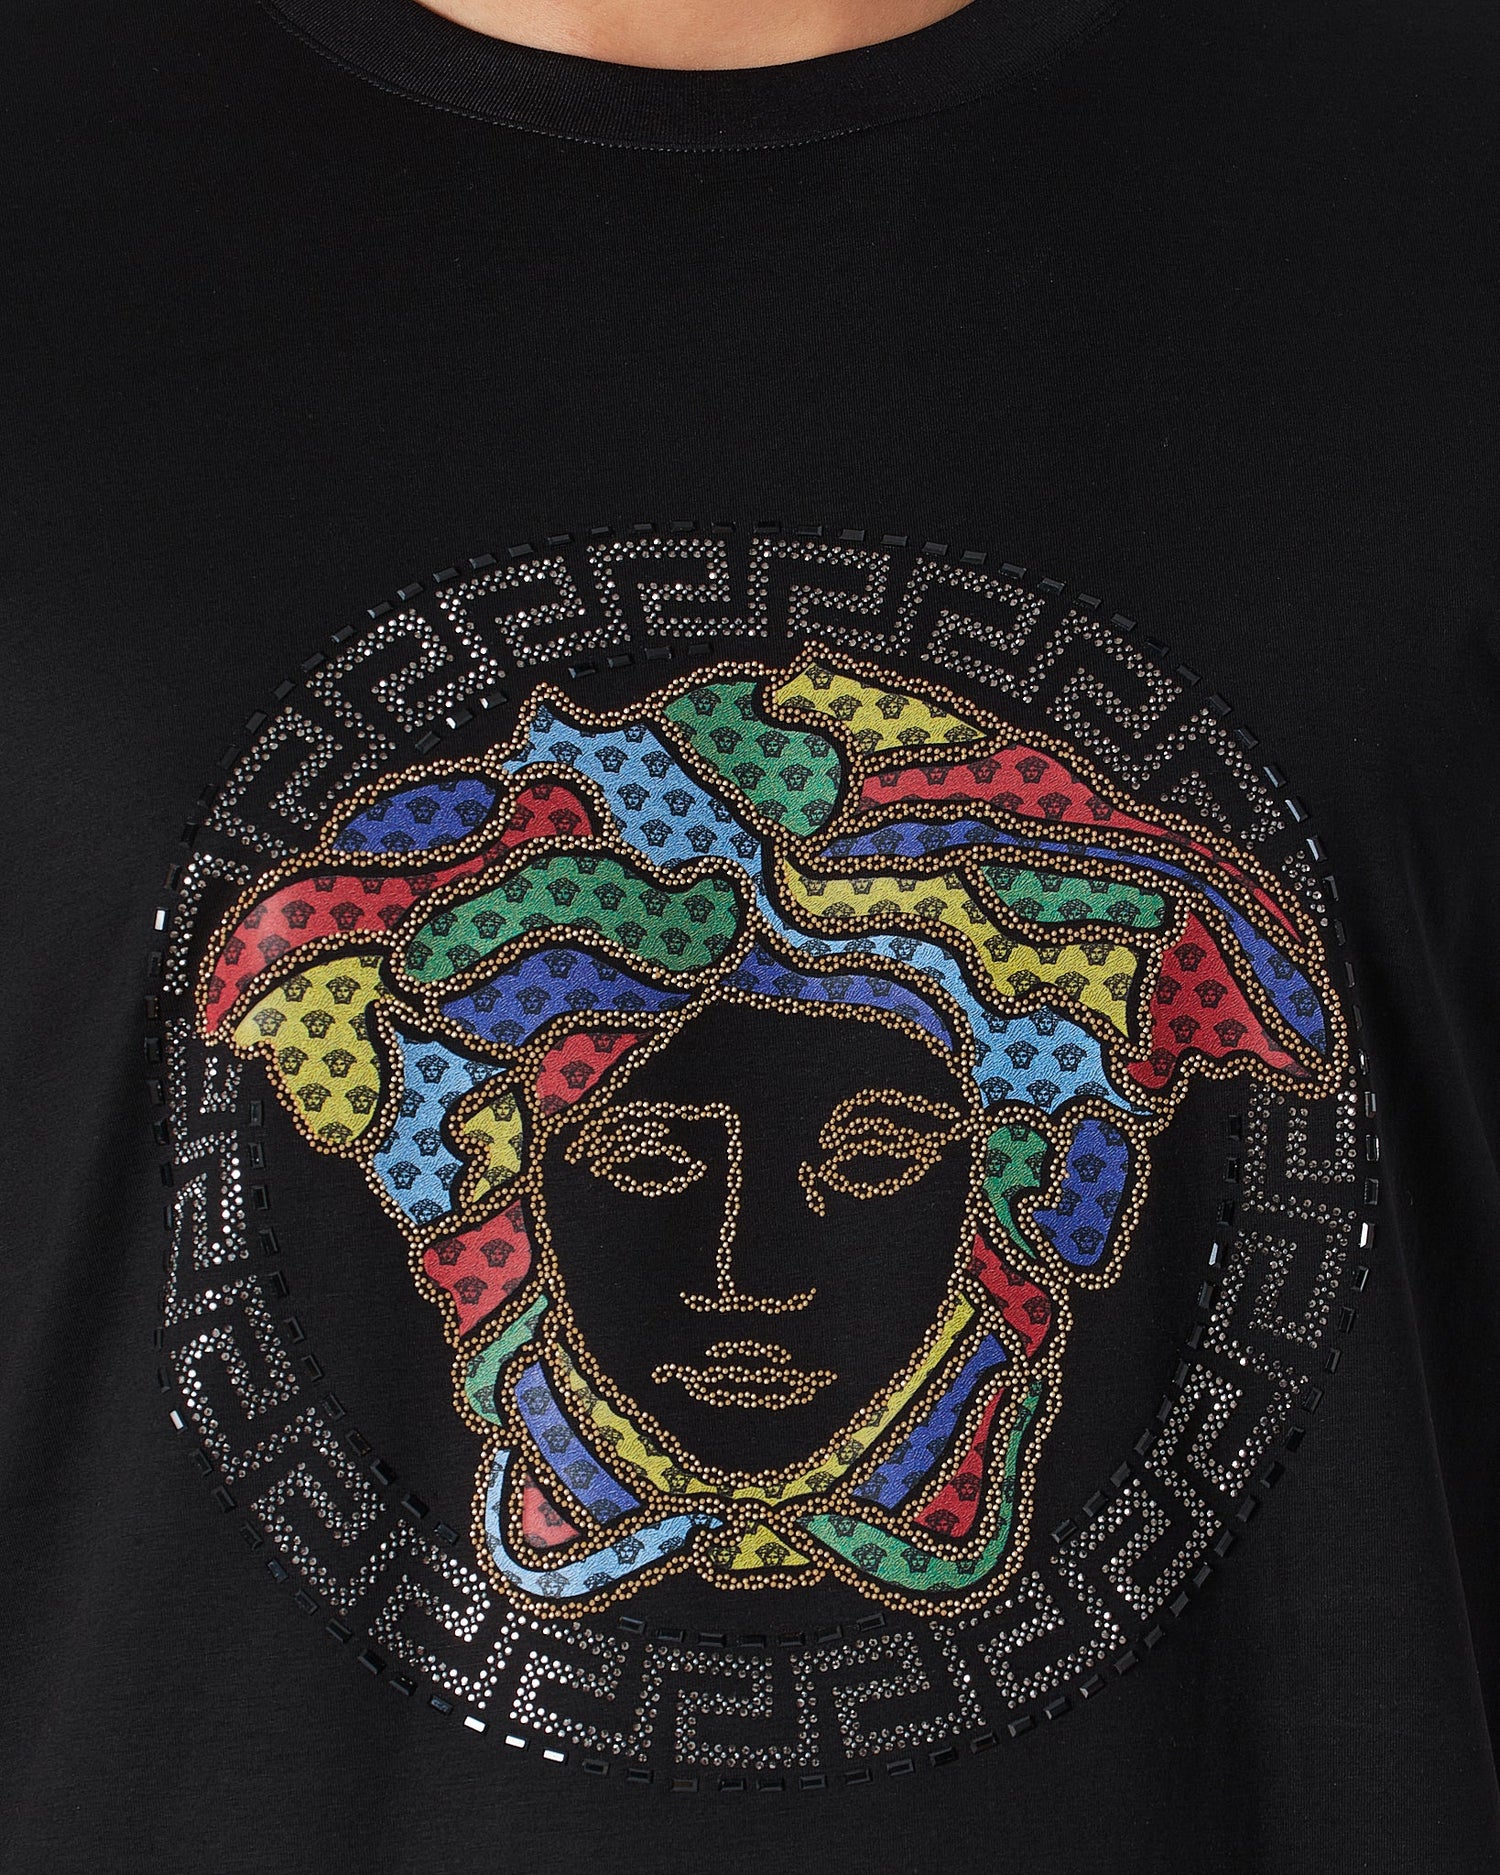 MOI OUTFIT-Rhinestone Medusa Printed Men T-Shirt 59.90